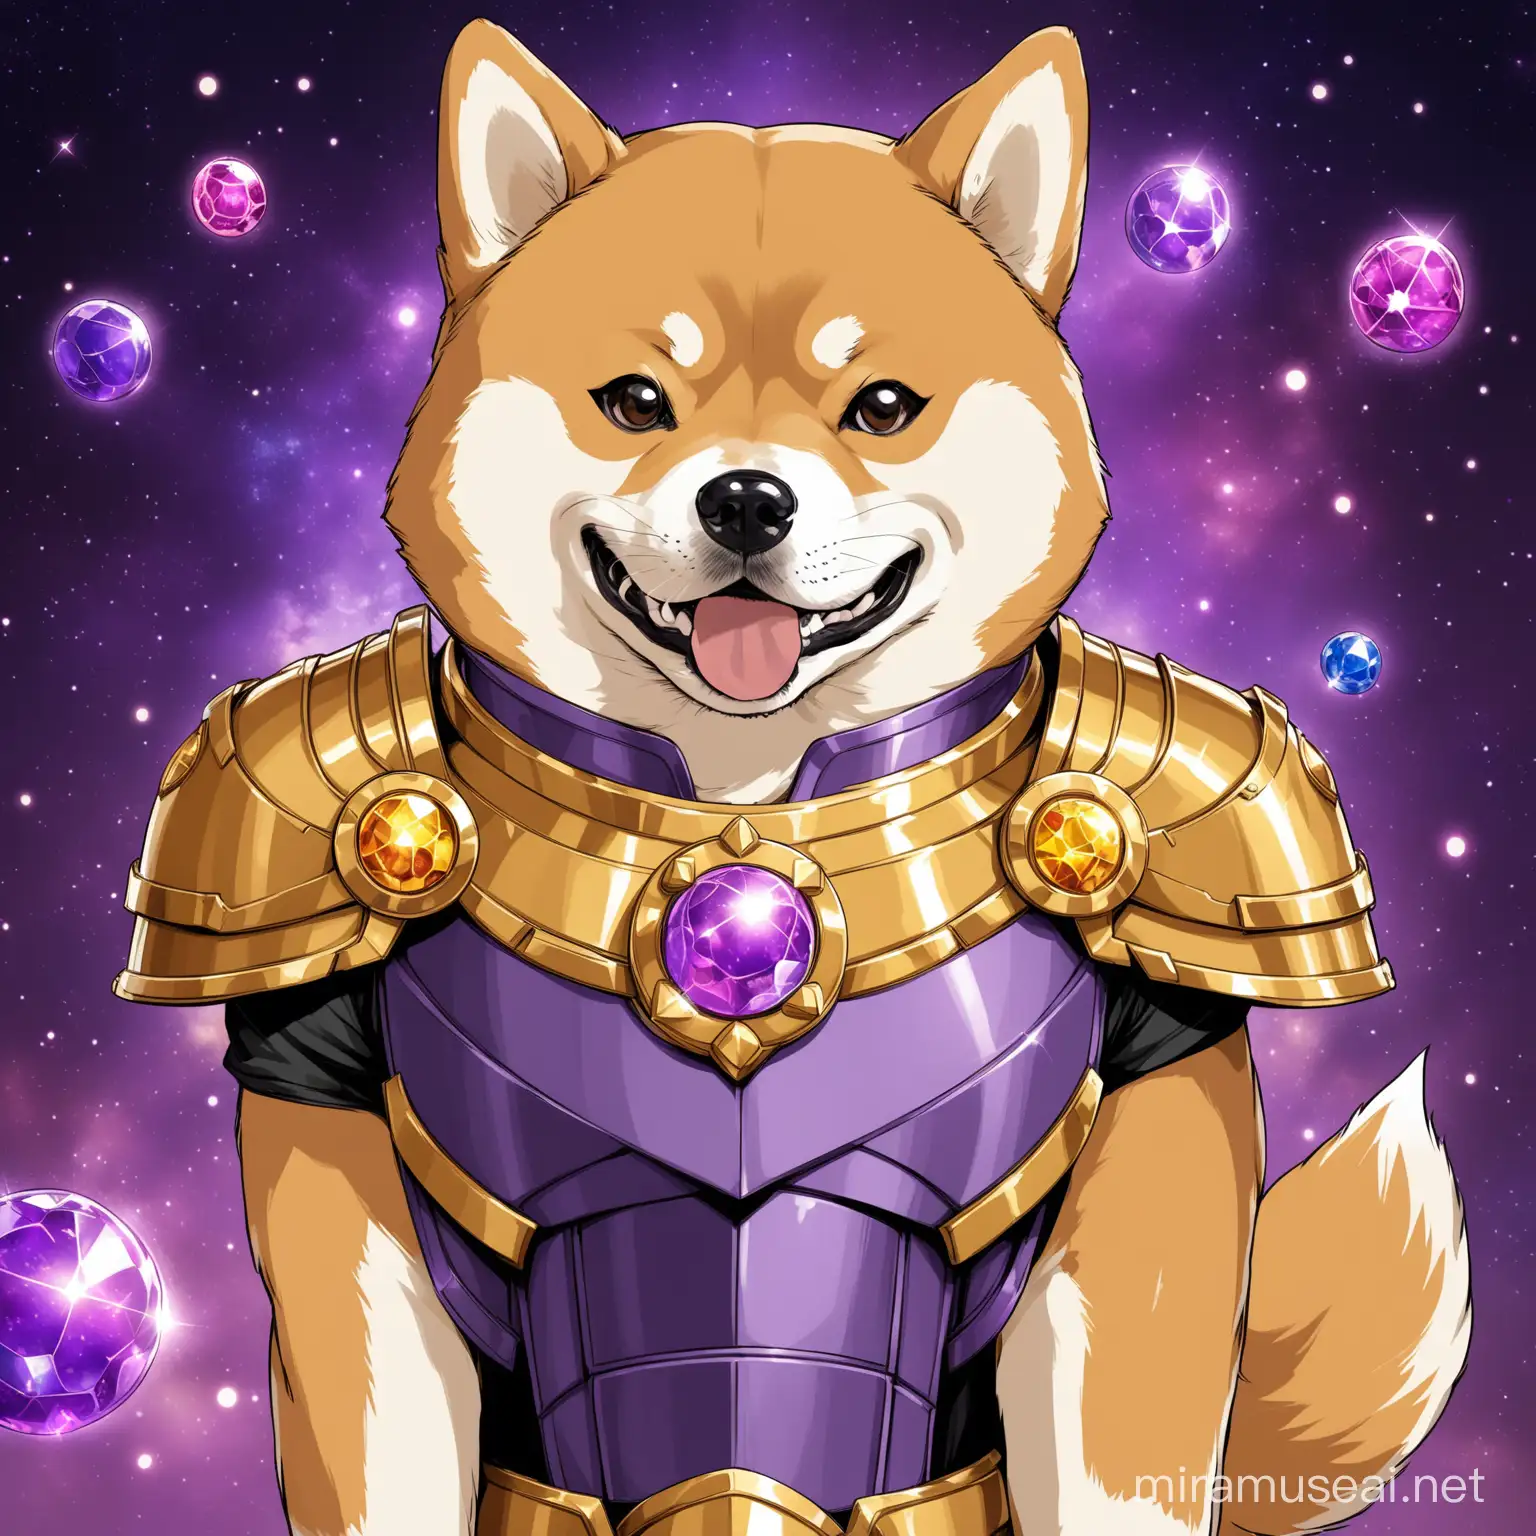 Shiba Inu in Custom ThanosStyle Armor with Infinity Gems